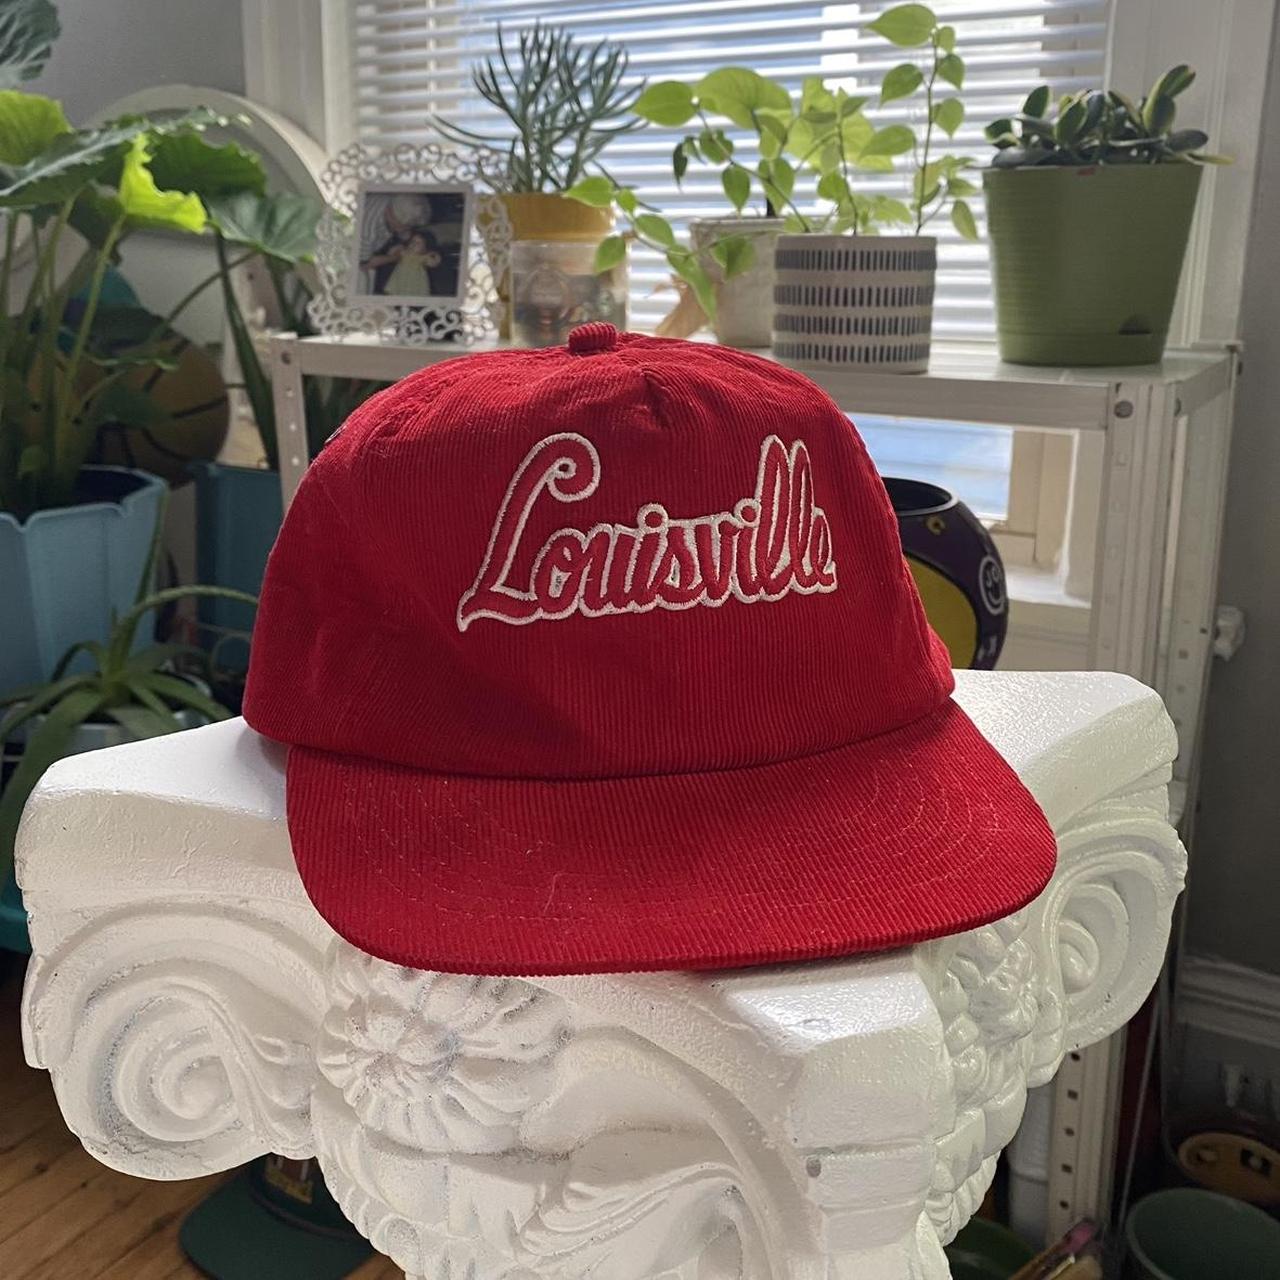 Vintage louisville cardinals hat. This vintage - Depop